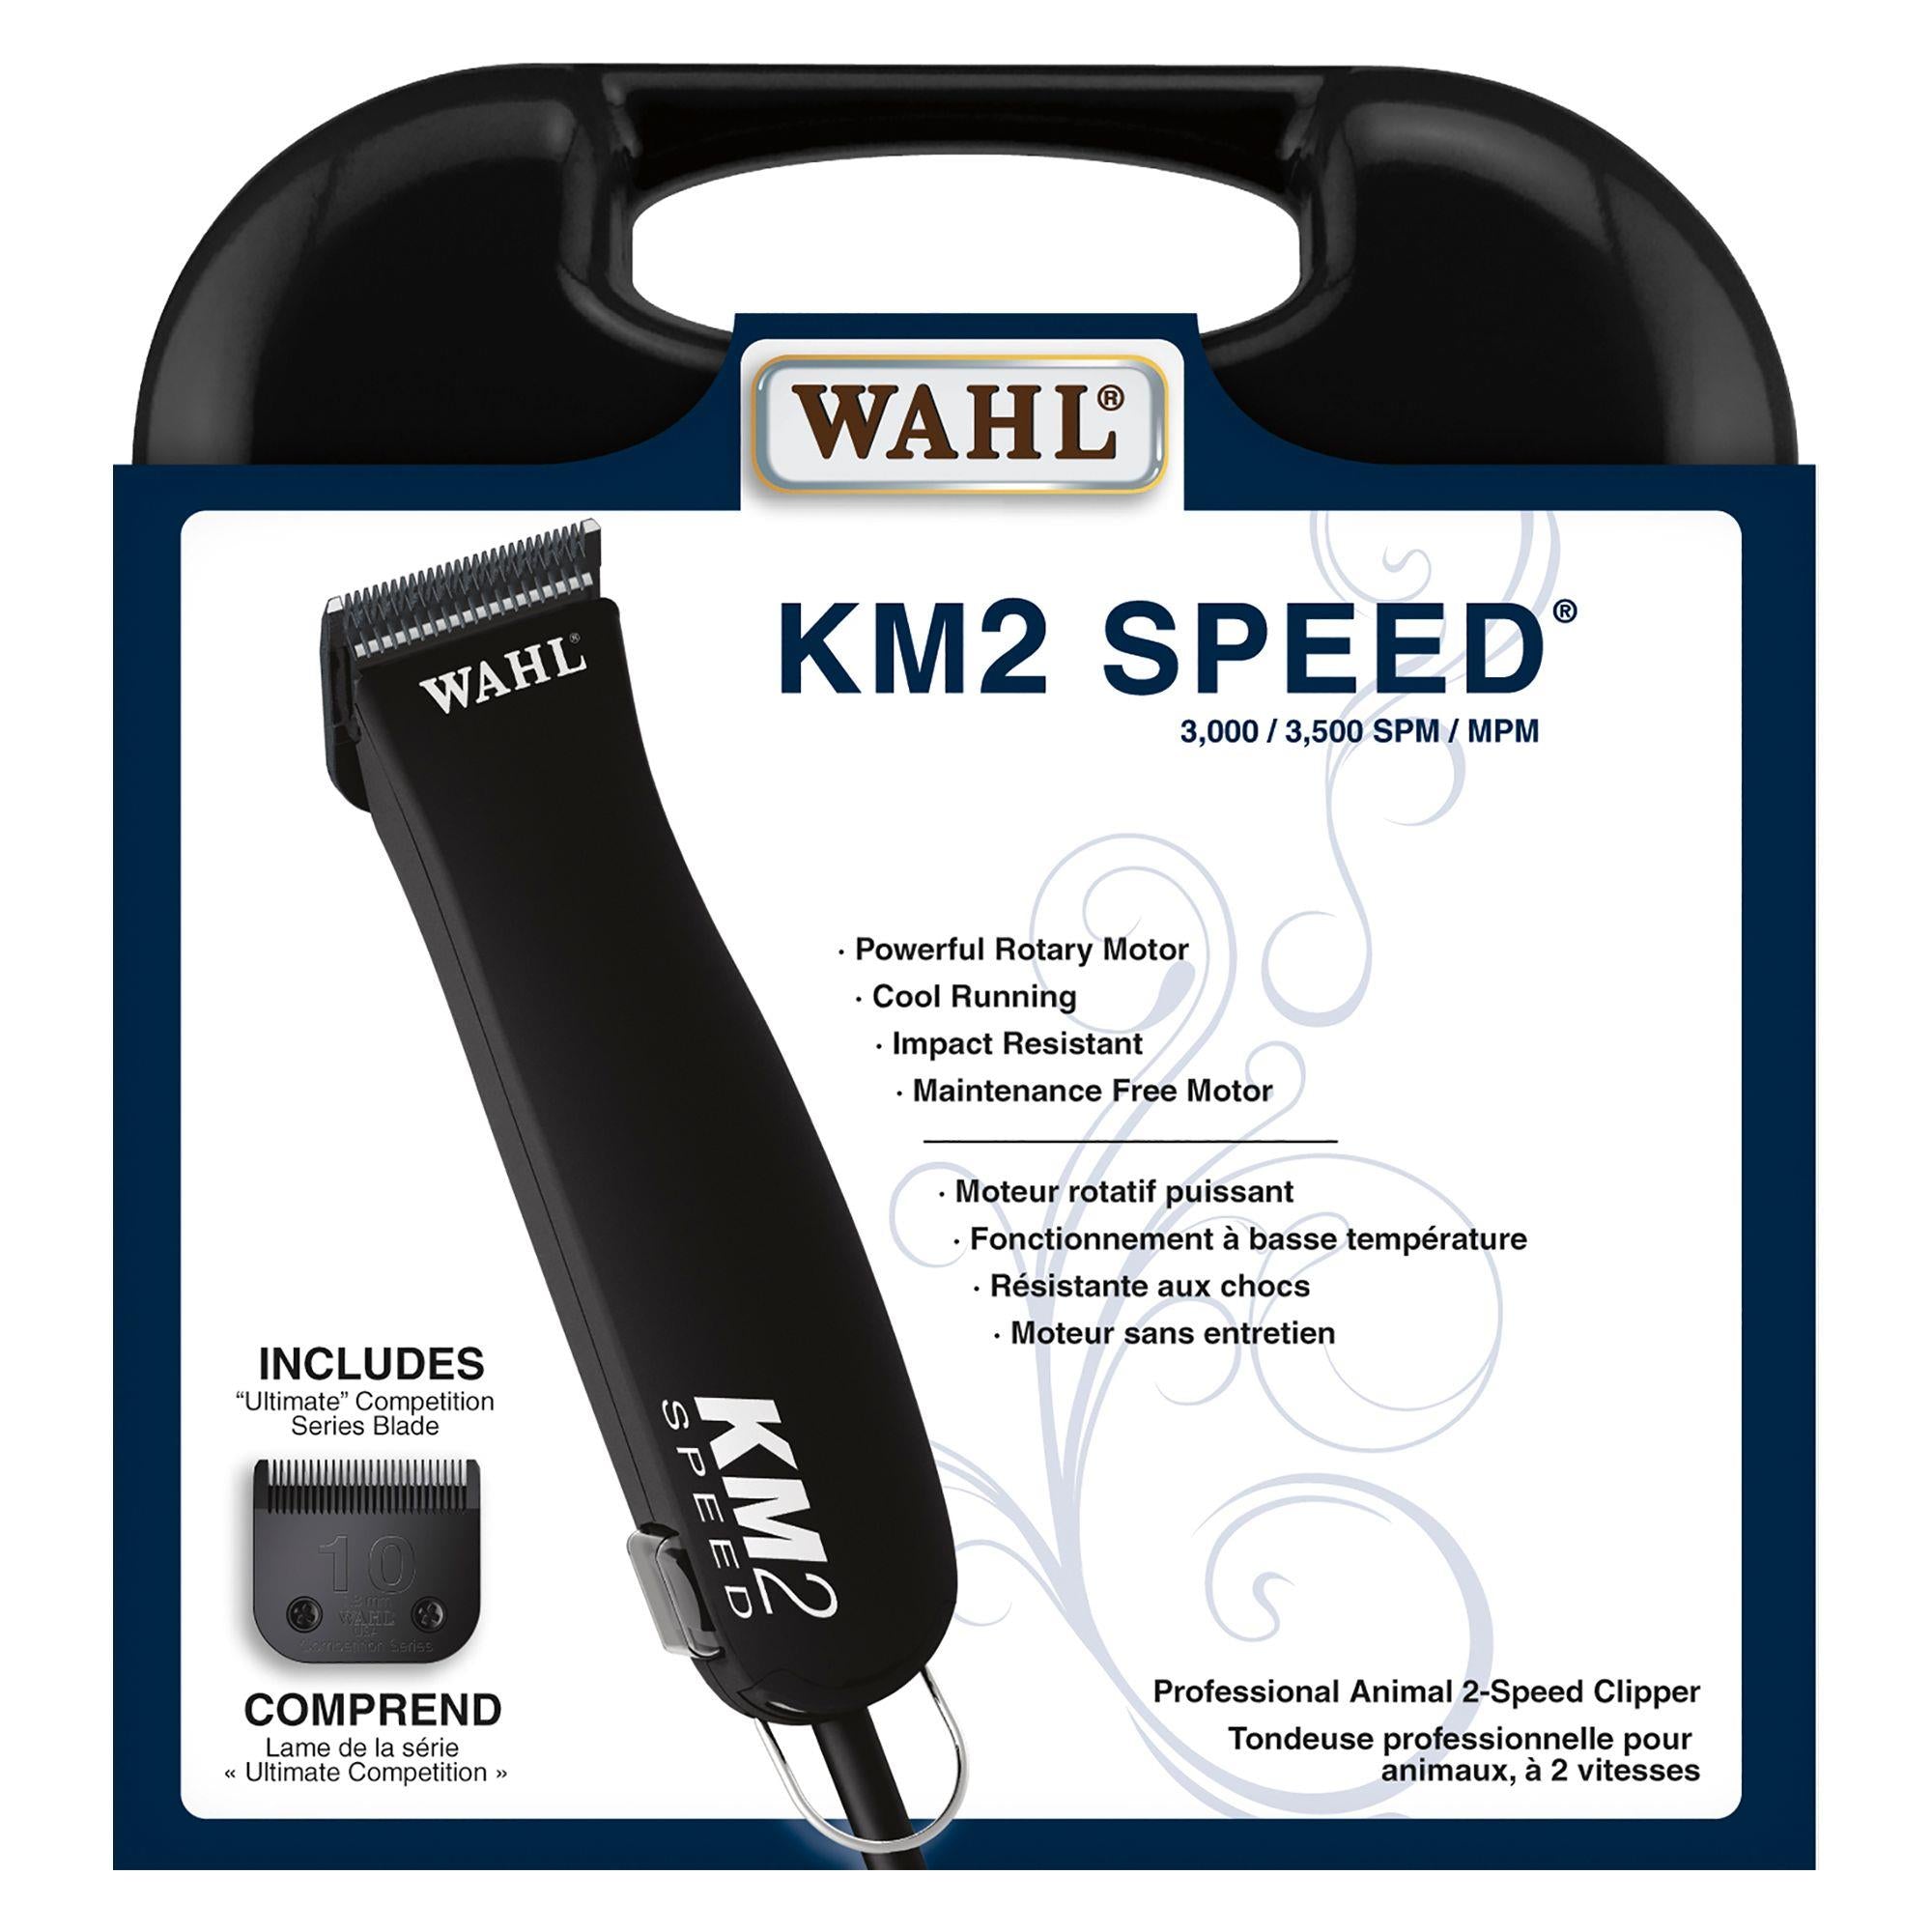 km2 speed wahl